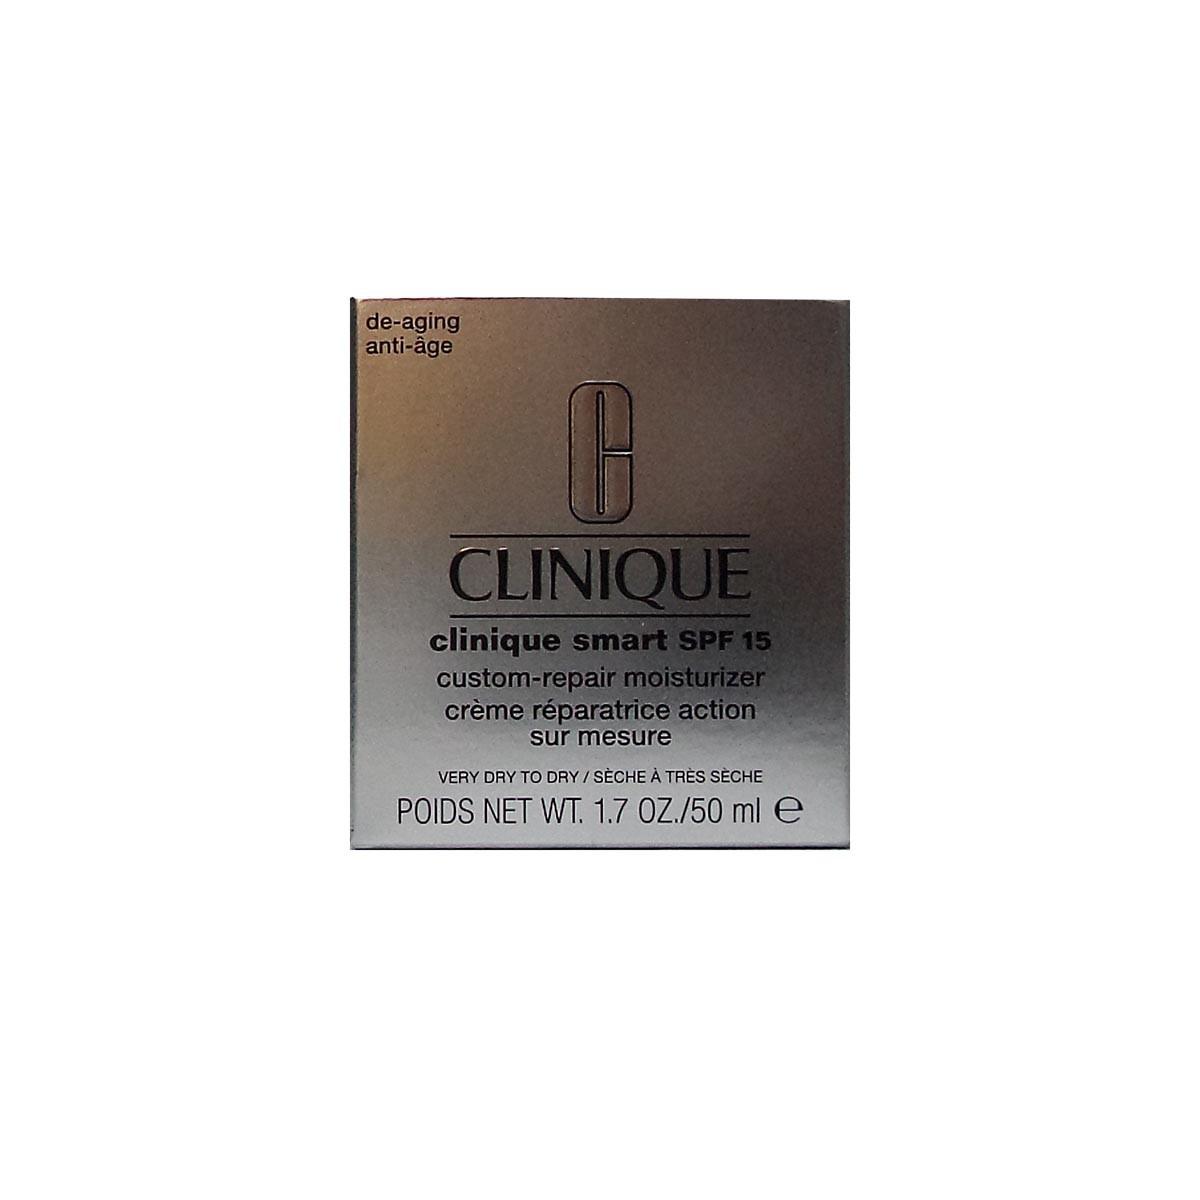 clinique-gradde-smart-spf15-custom-repair-moisturizer-antiage-seche-a-tres-seche-50ml-i